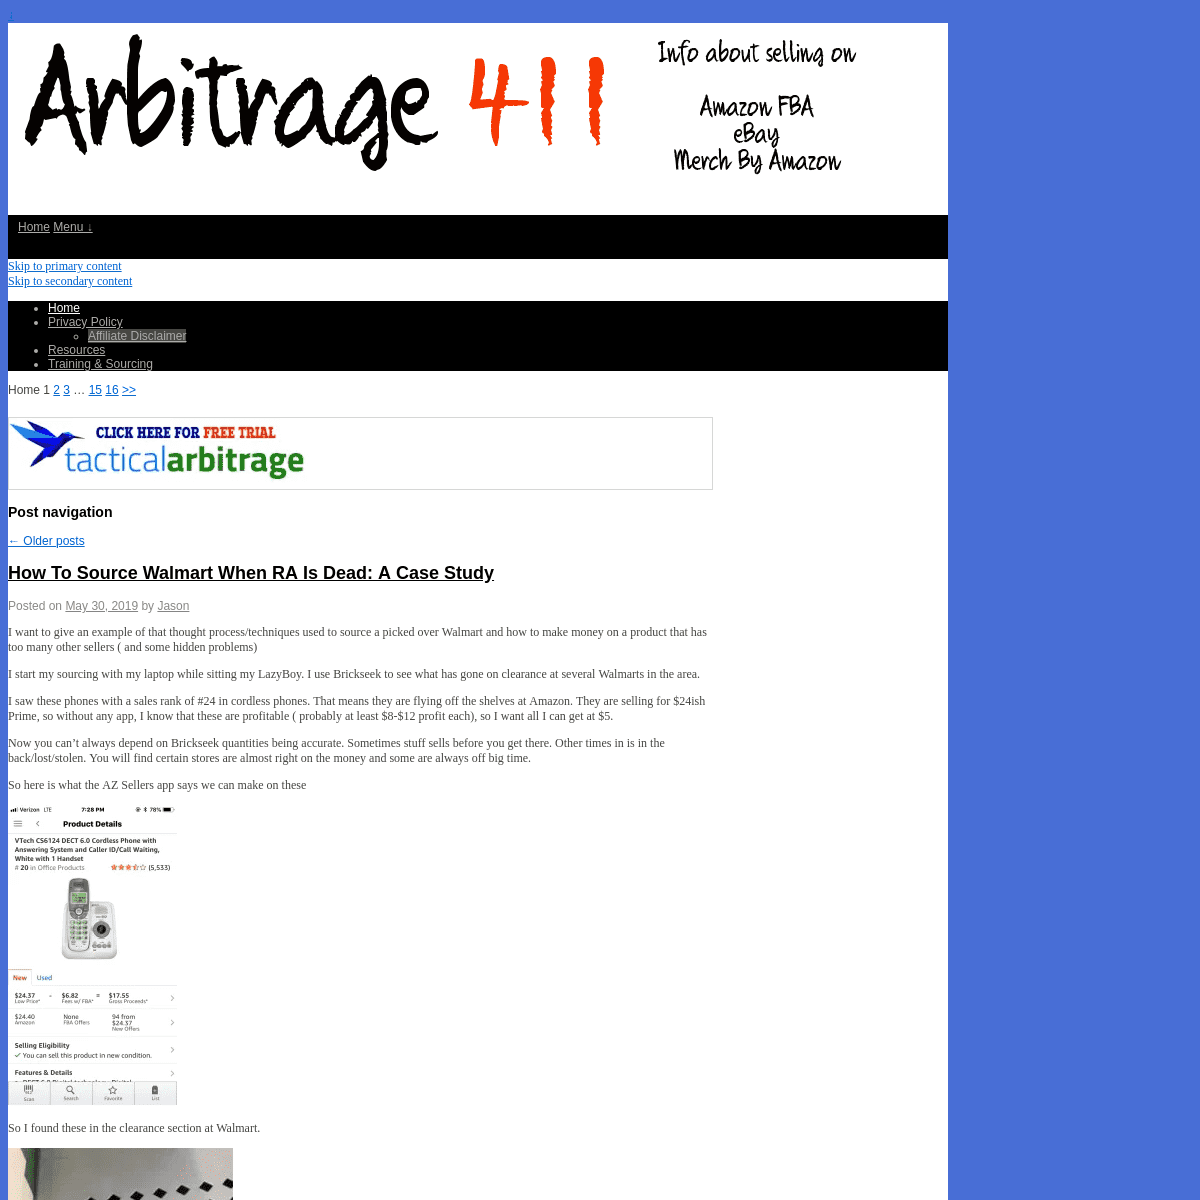 A complete backup of arbitrage411.com